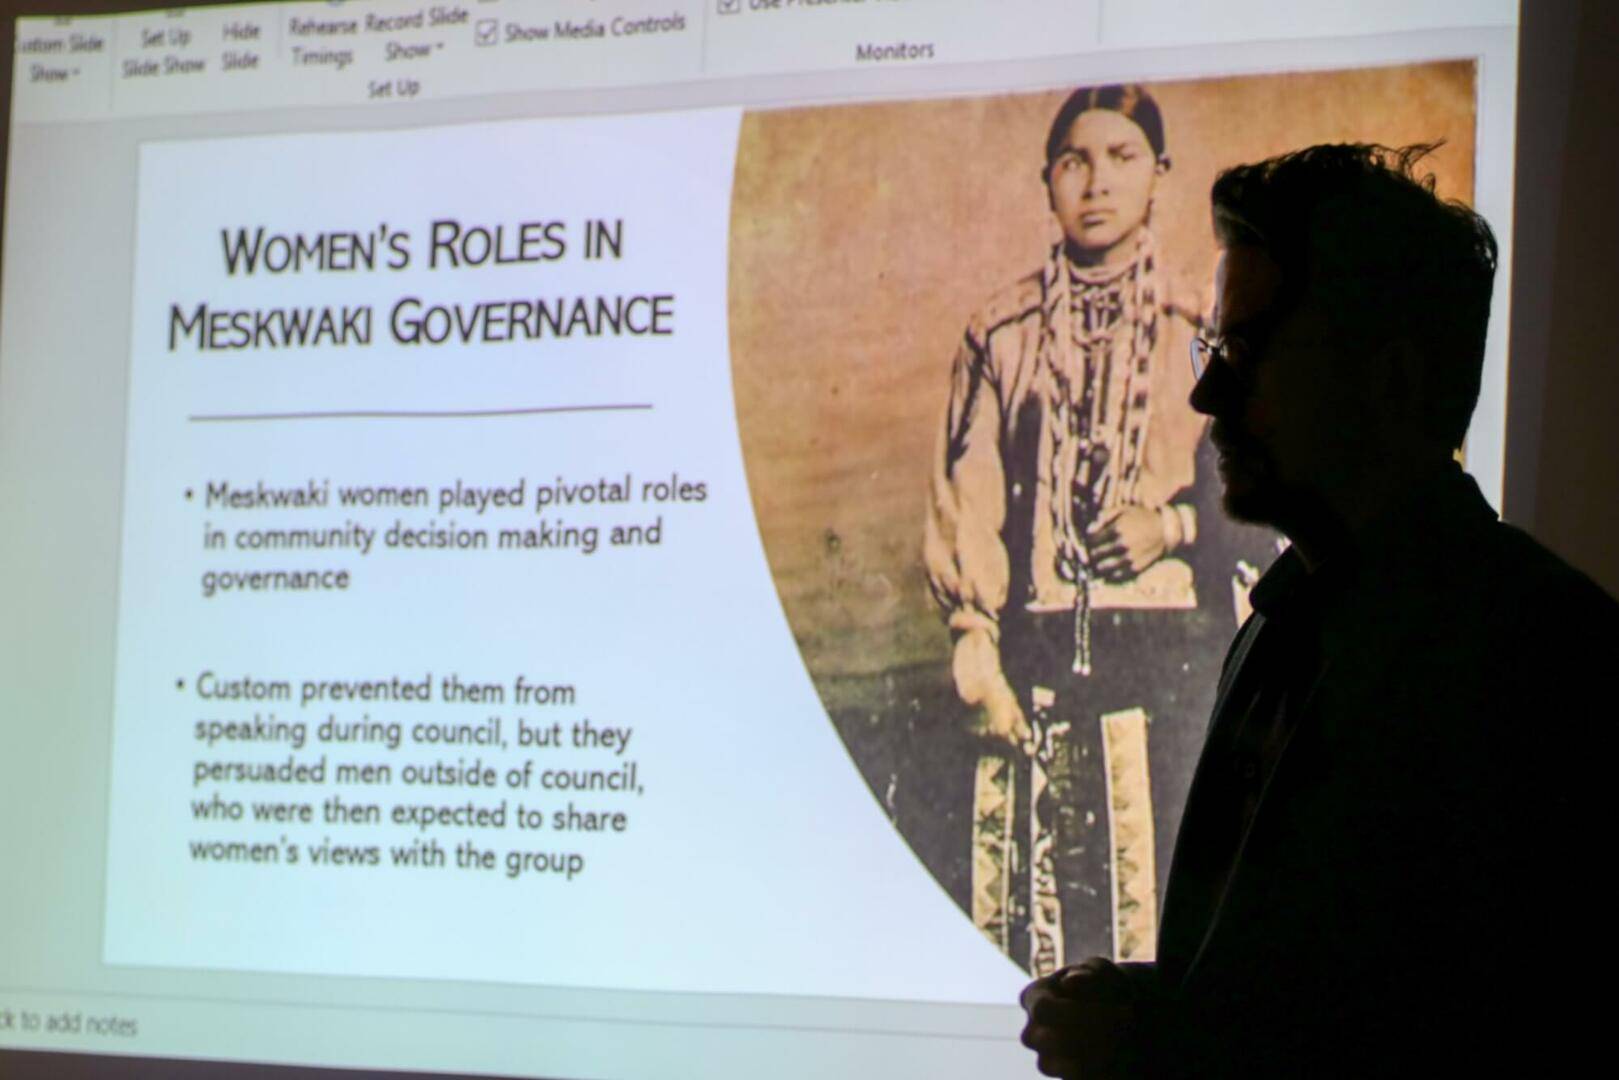 Man giving a presentation on women's roles in Meskwaki governance